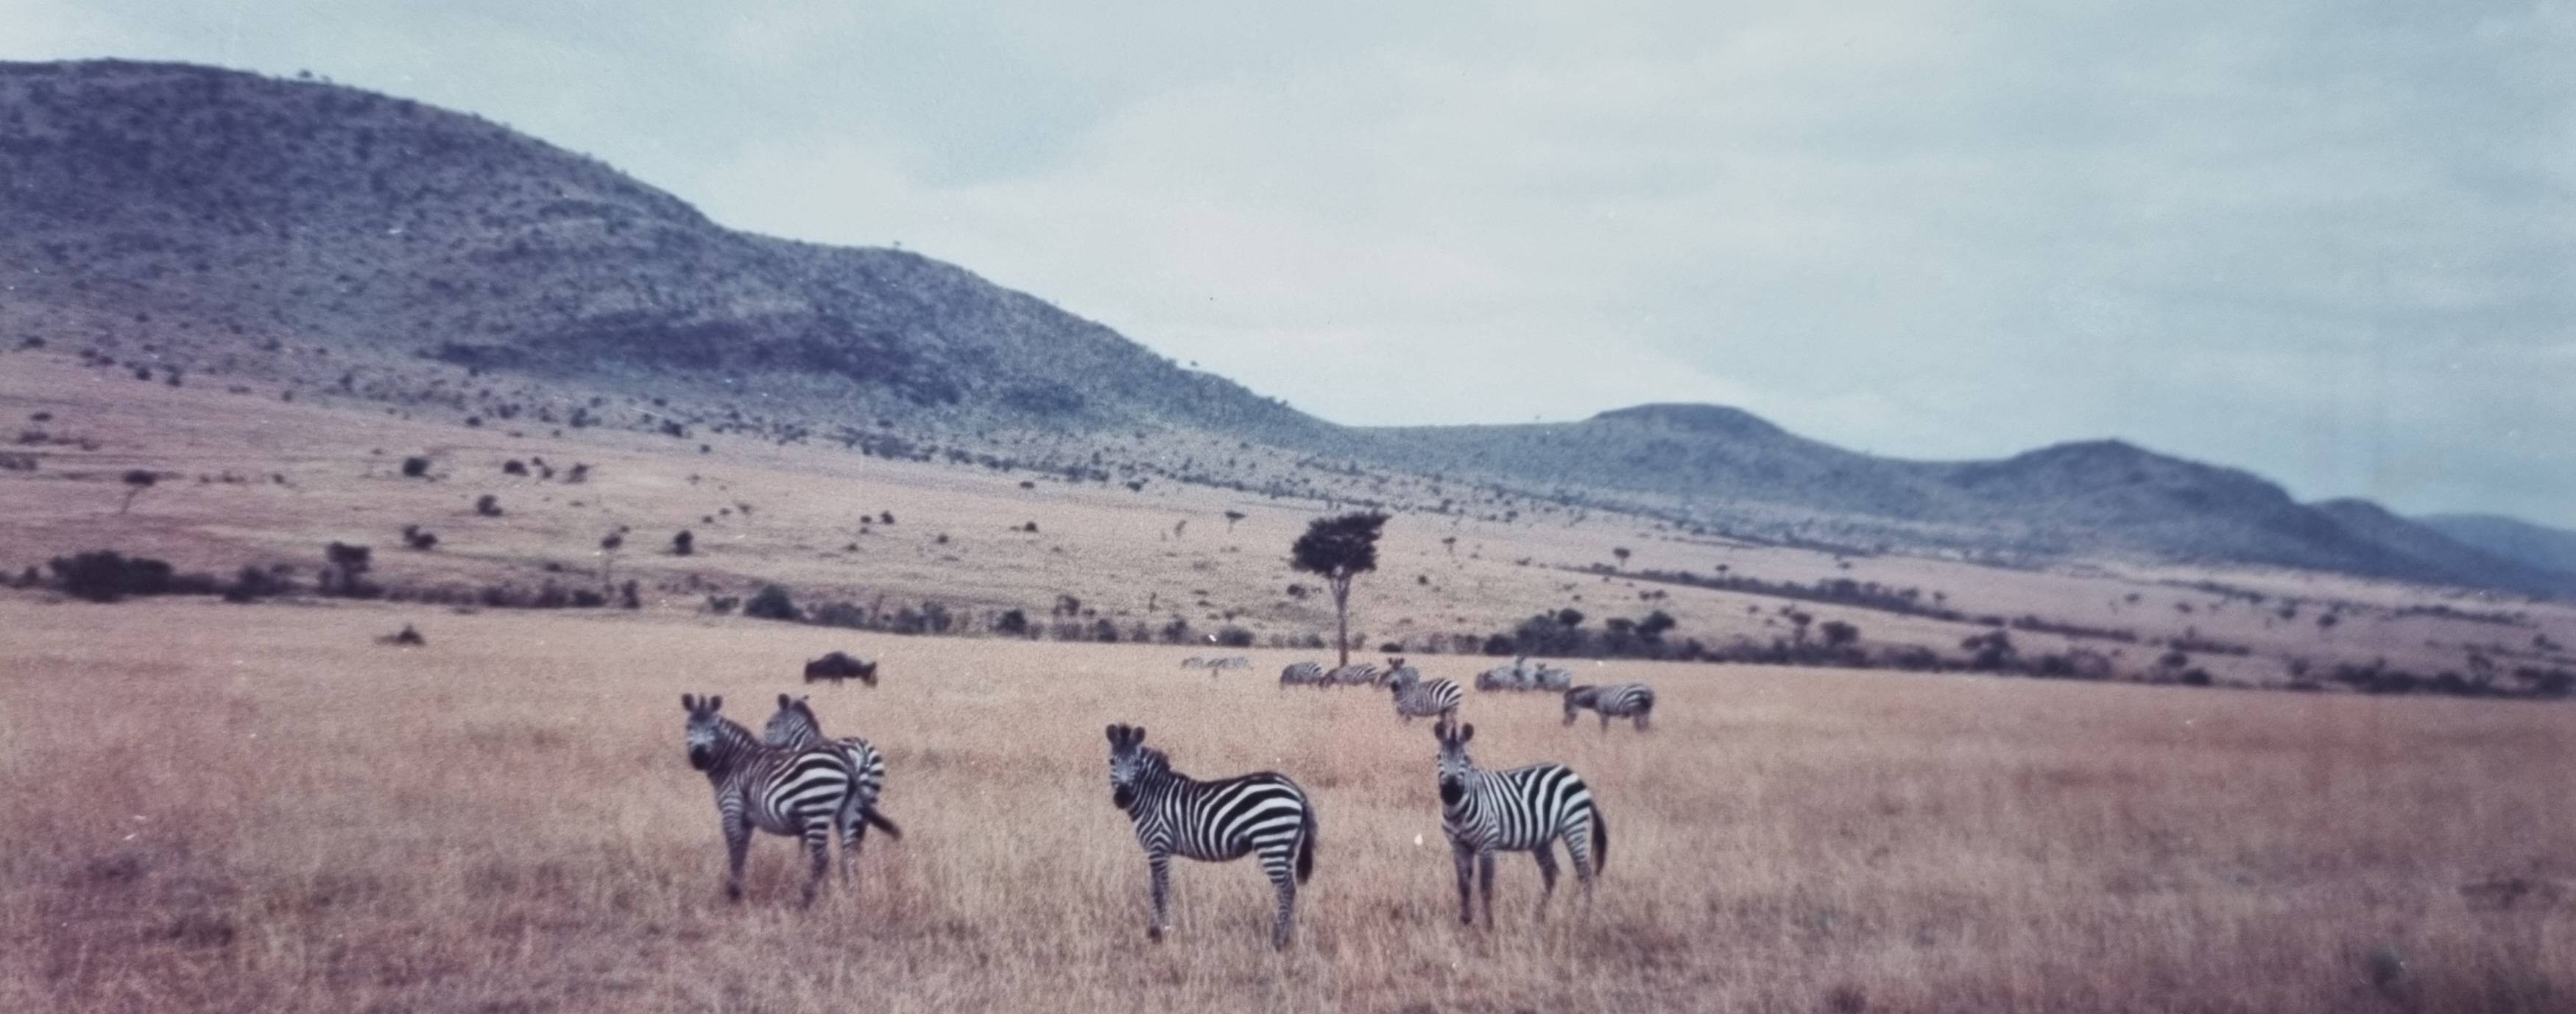 Maasai Mara National Reserve Safari, Kenya 1991